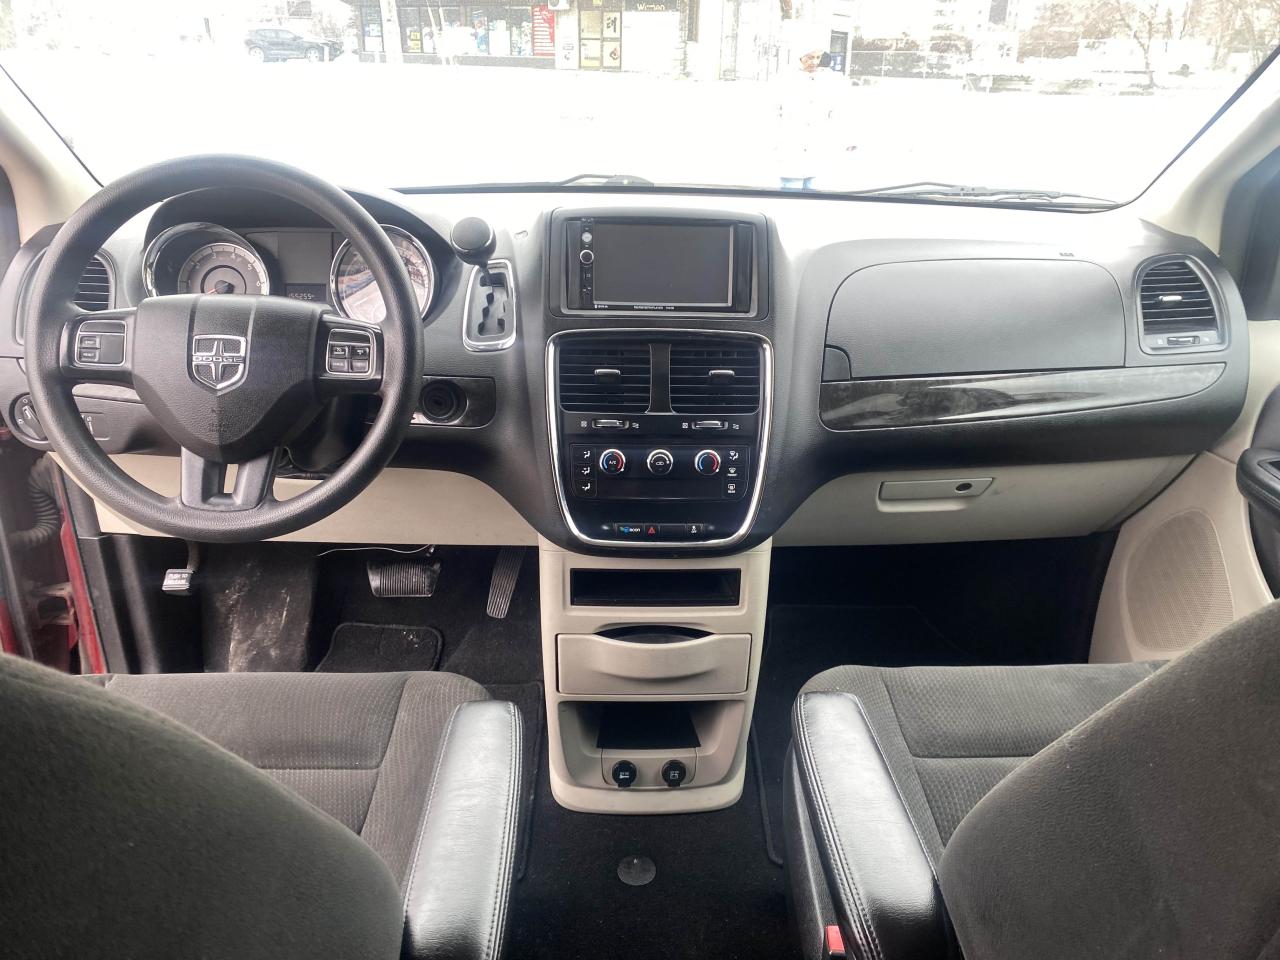 2015 Dodge Grand Caravan 7 Passenger/Bluetooth/Rev. Camera/Comes Certified - Photo #14